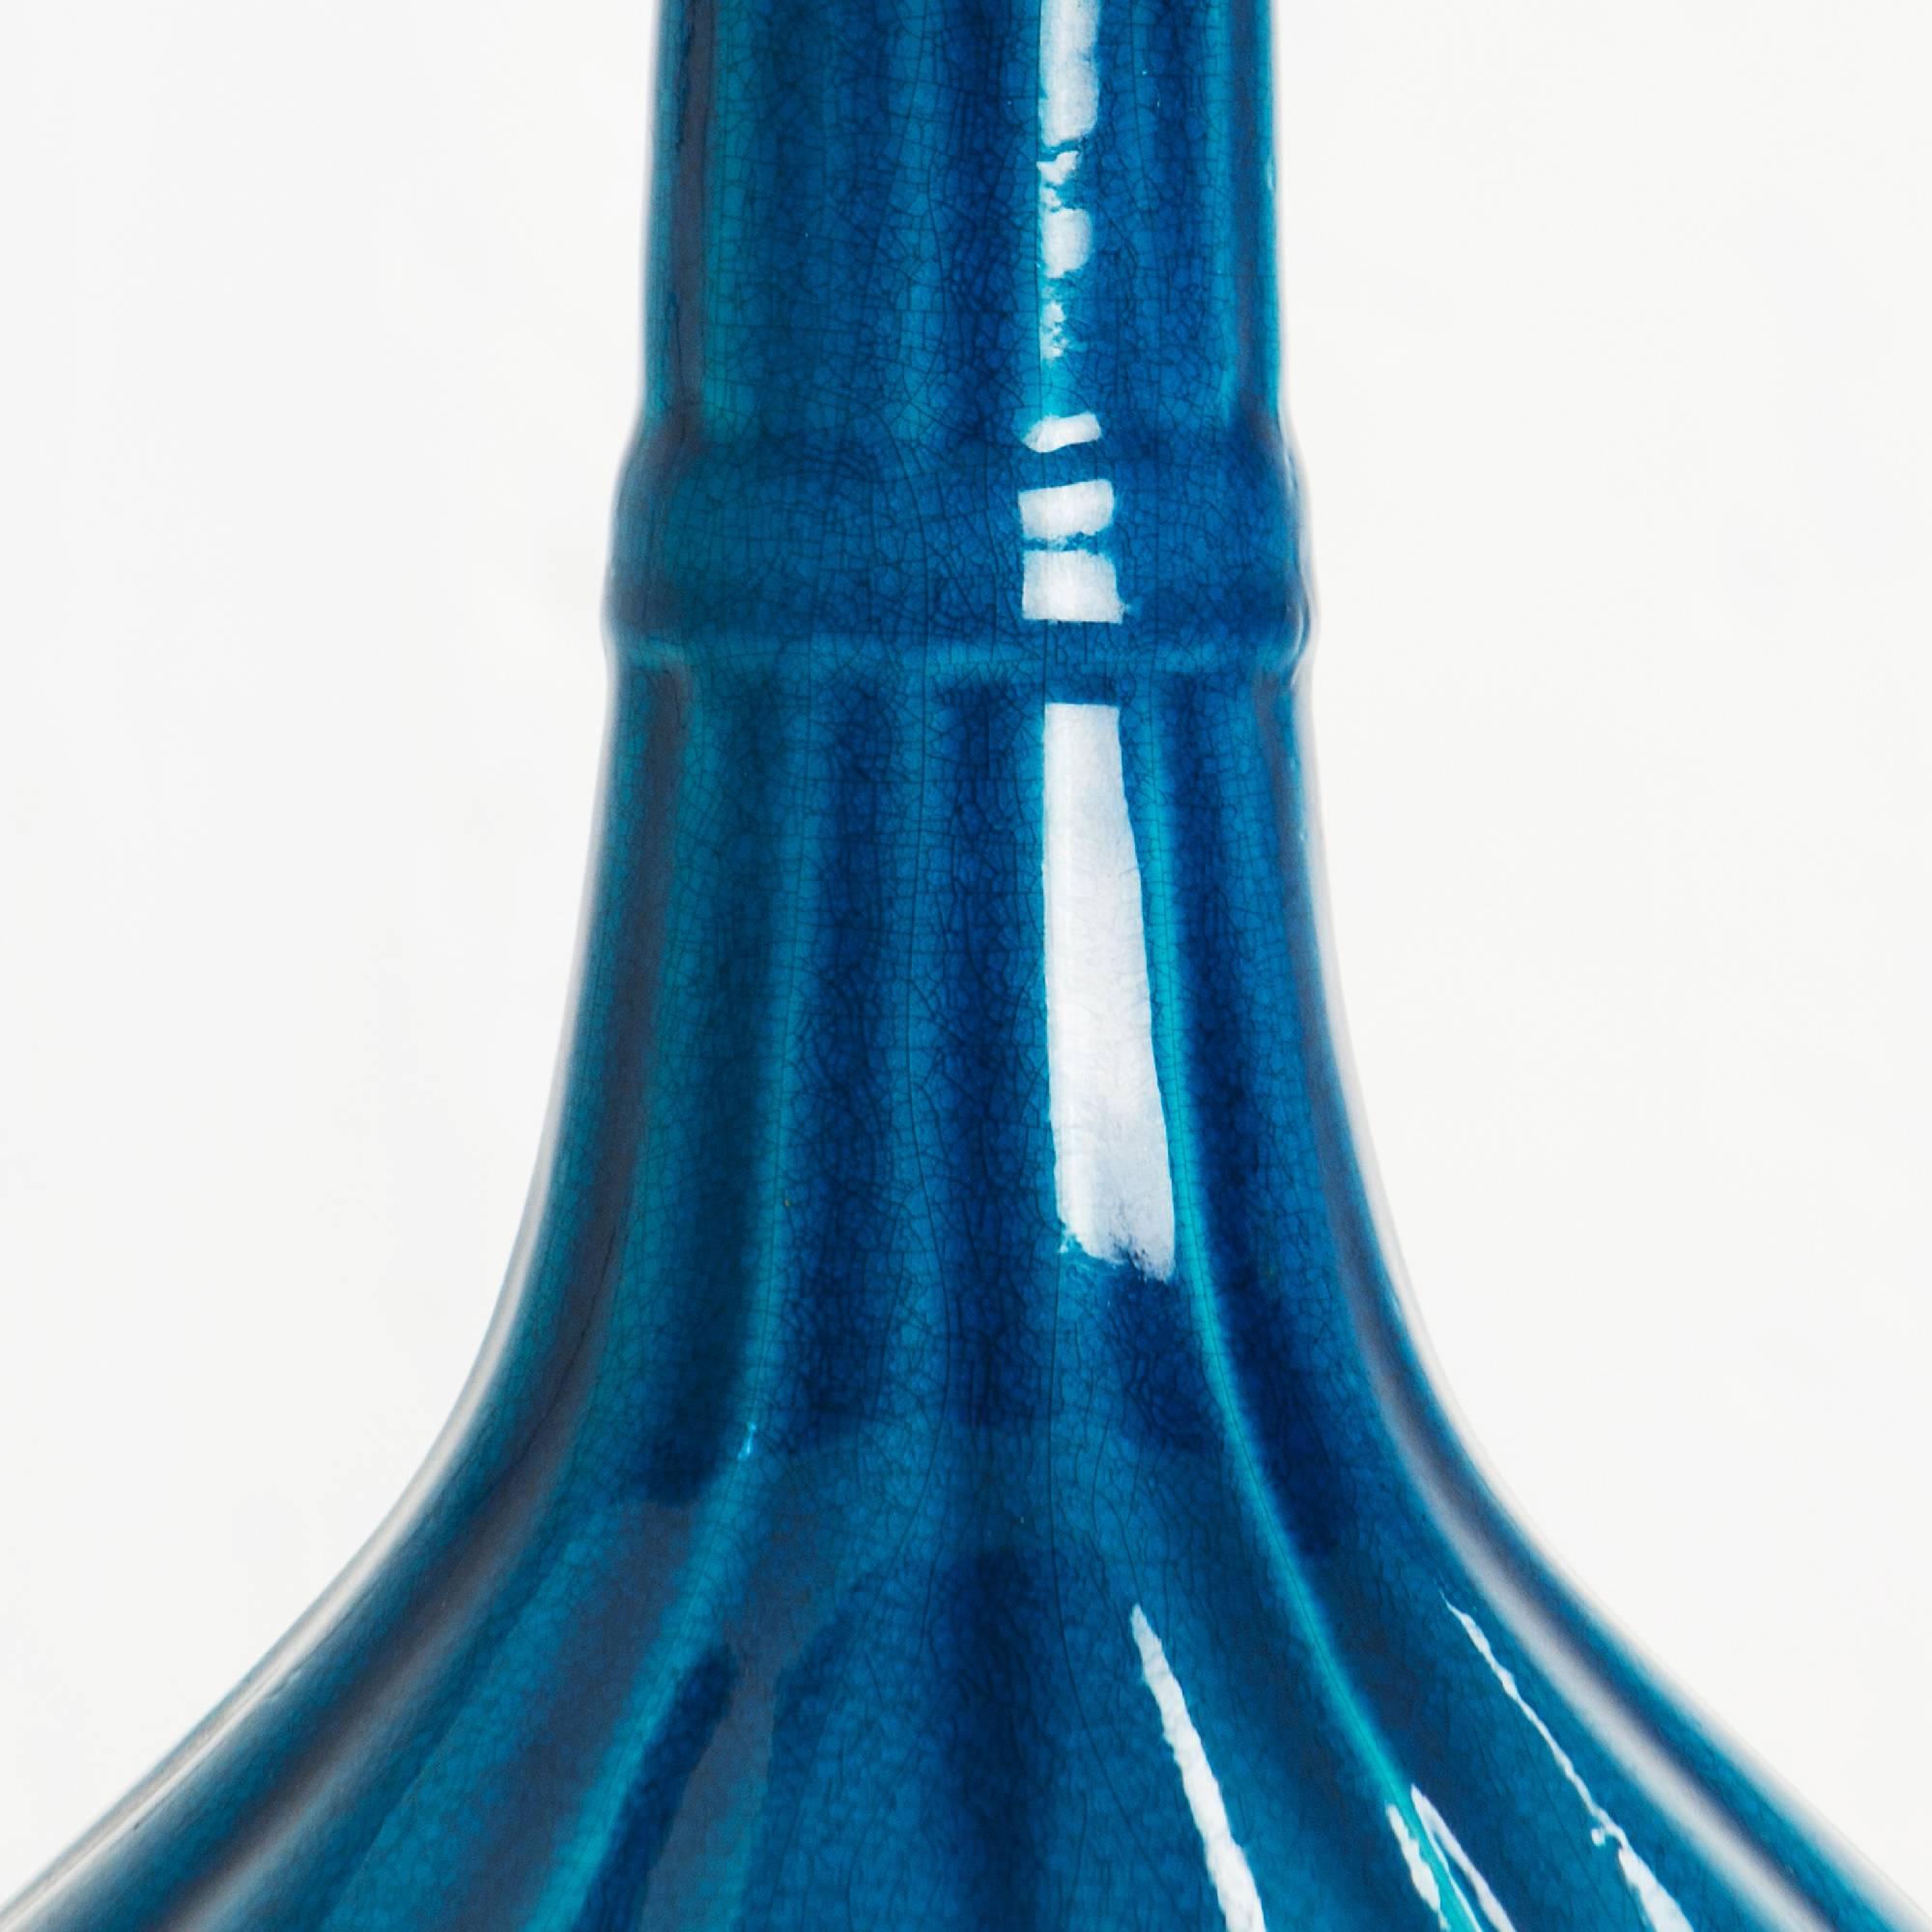 French Pol Chambost Blue Crackle Glaze Ceramic Lamp